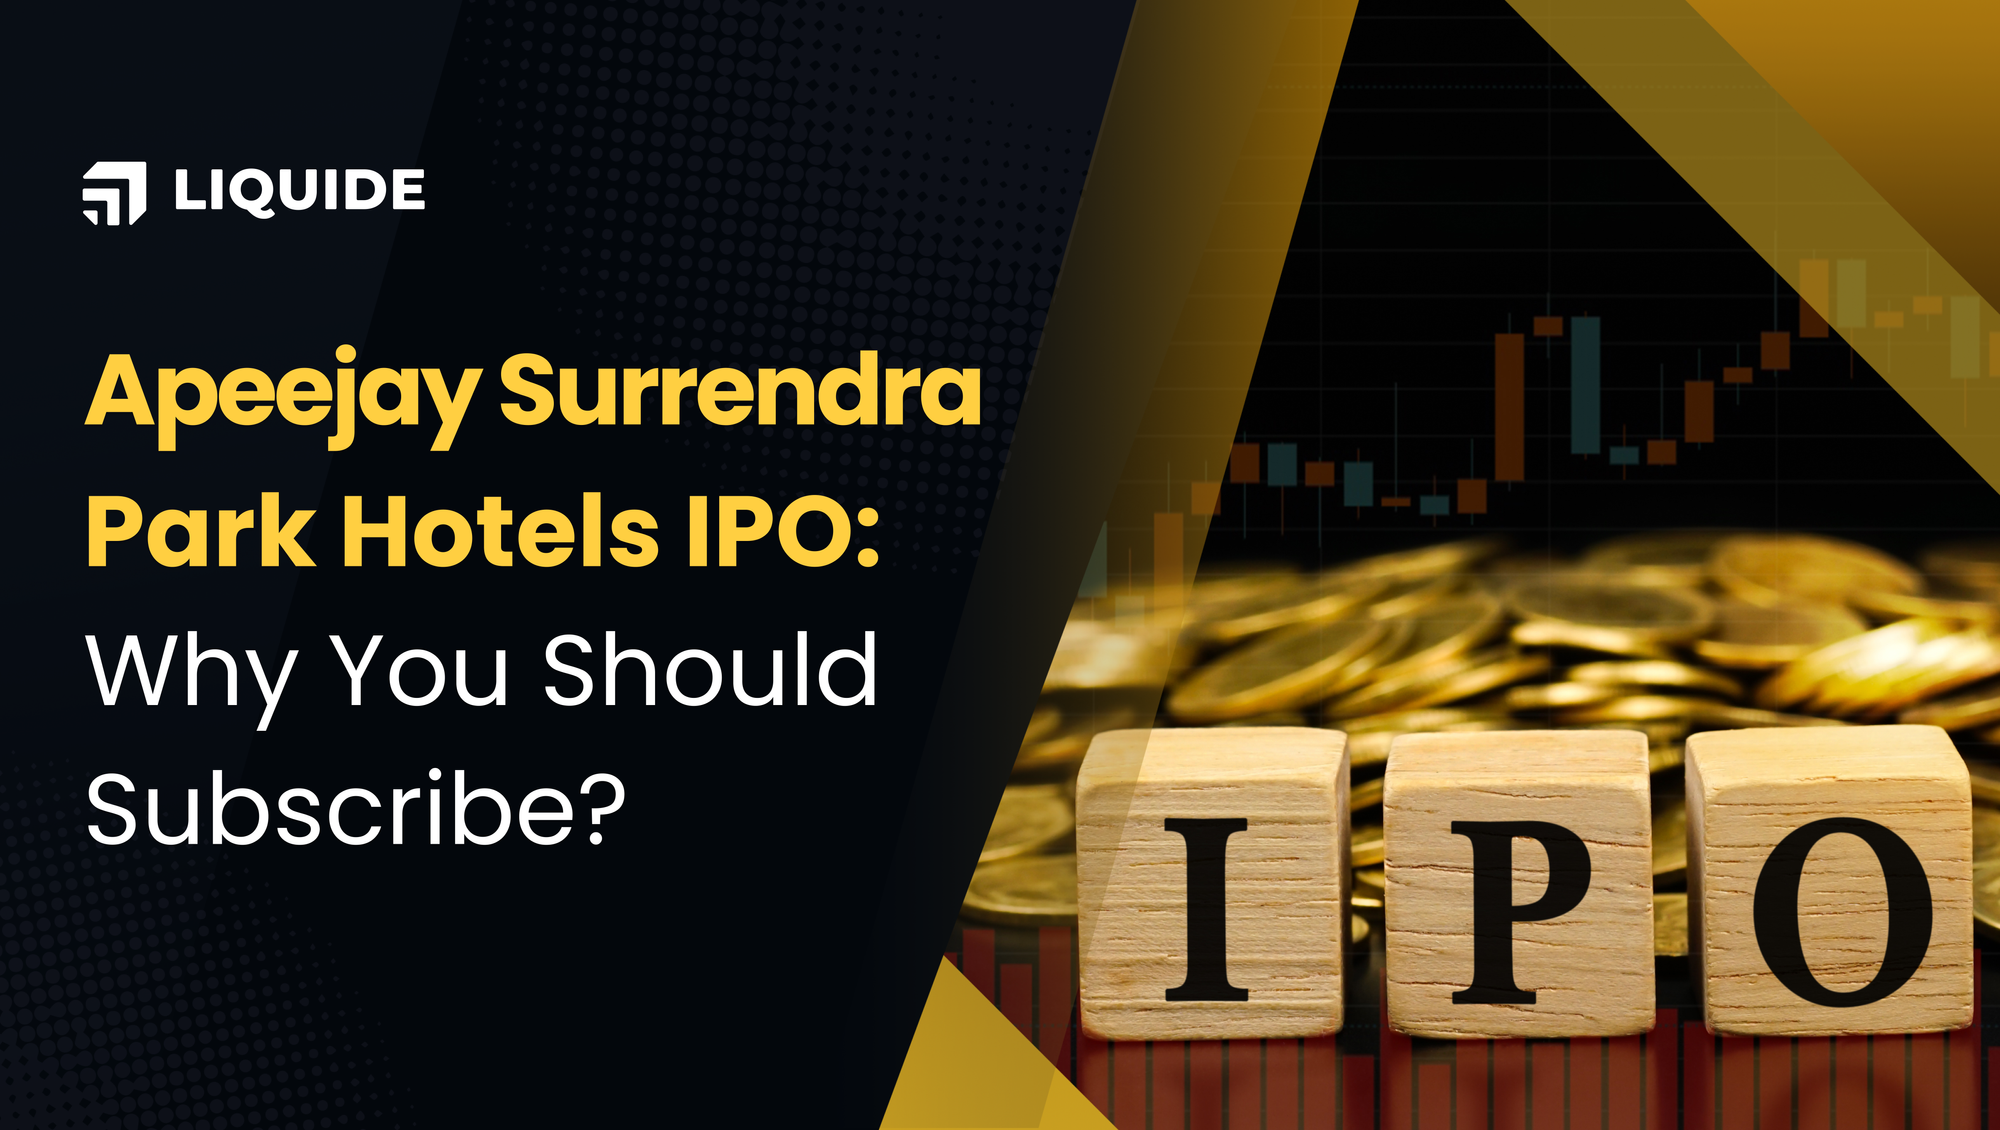 Apeejay Surrendra Park Hotels IPO, Latest IPO, Liquide, Recent IPO, Apeejay Surrendra Park Hotels, IPO News